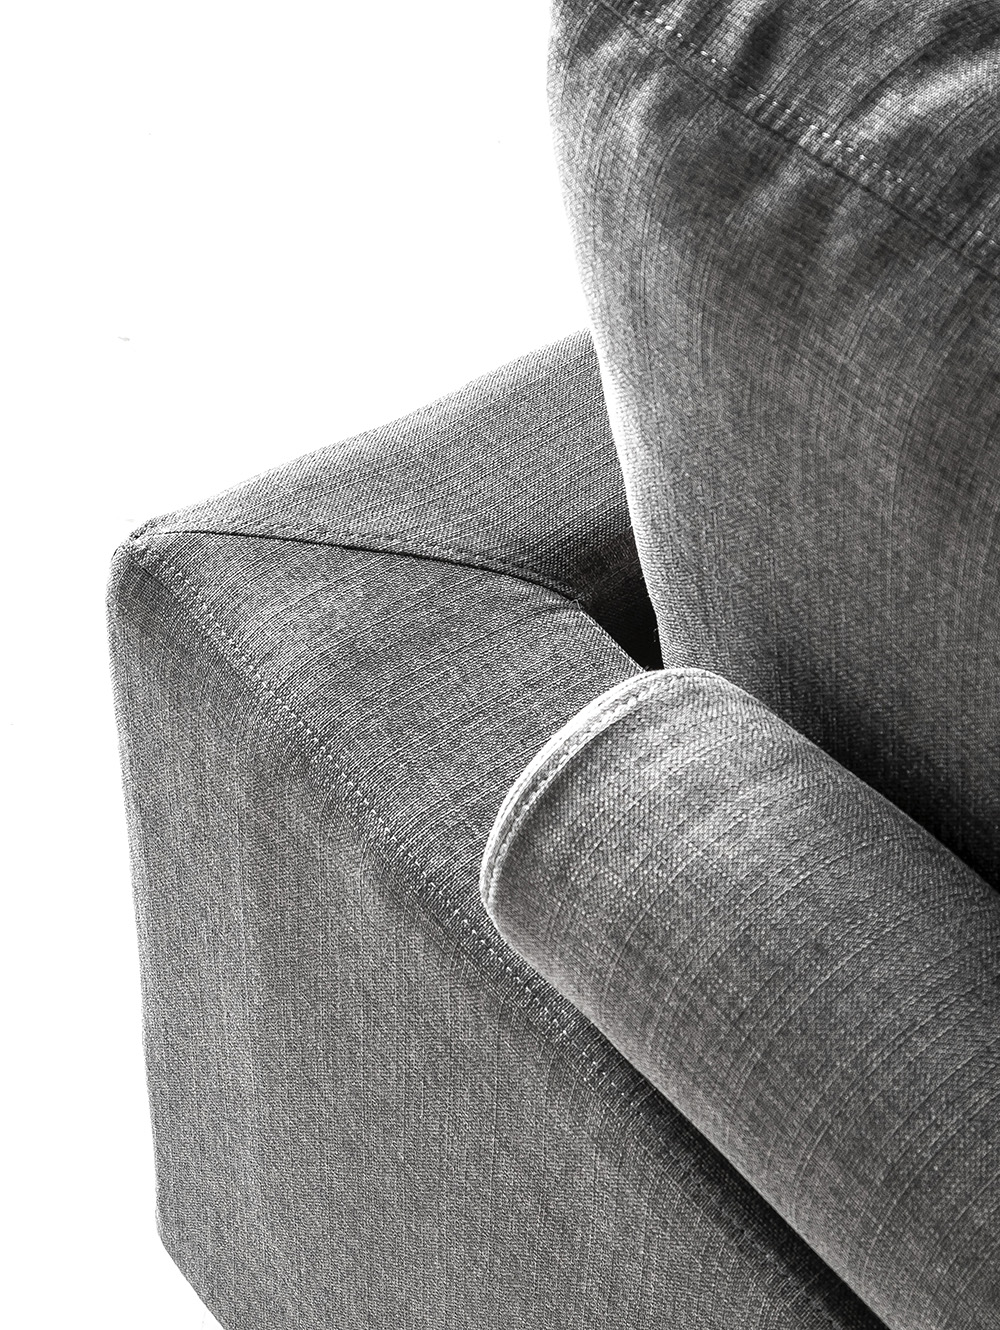 Sofa en ele gris oscuro-SOFA BELMONT SPAZIO PETROLEO-Landmark-5.jpg image number null